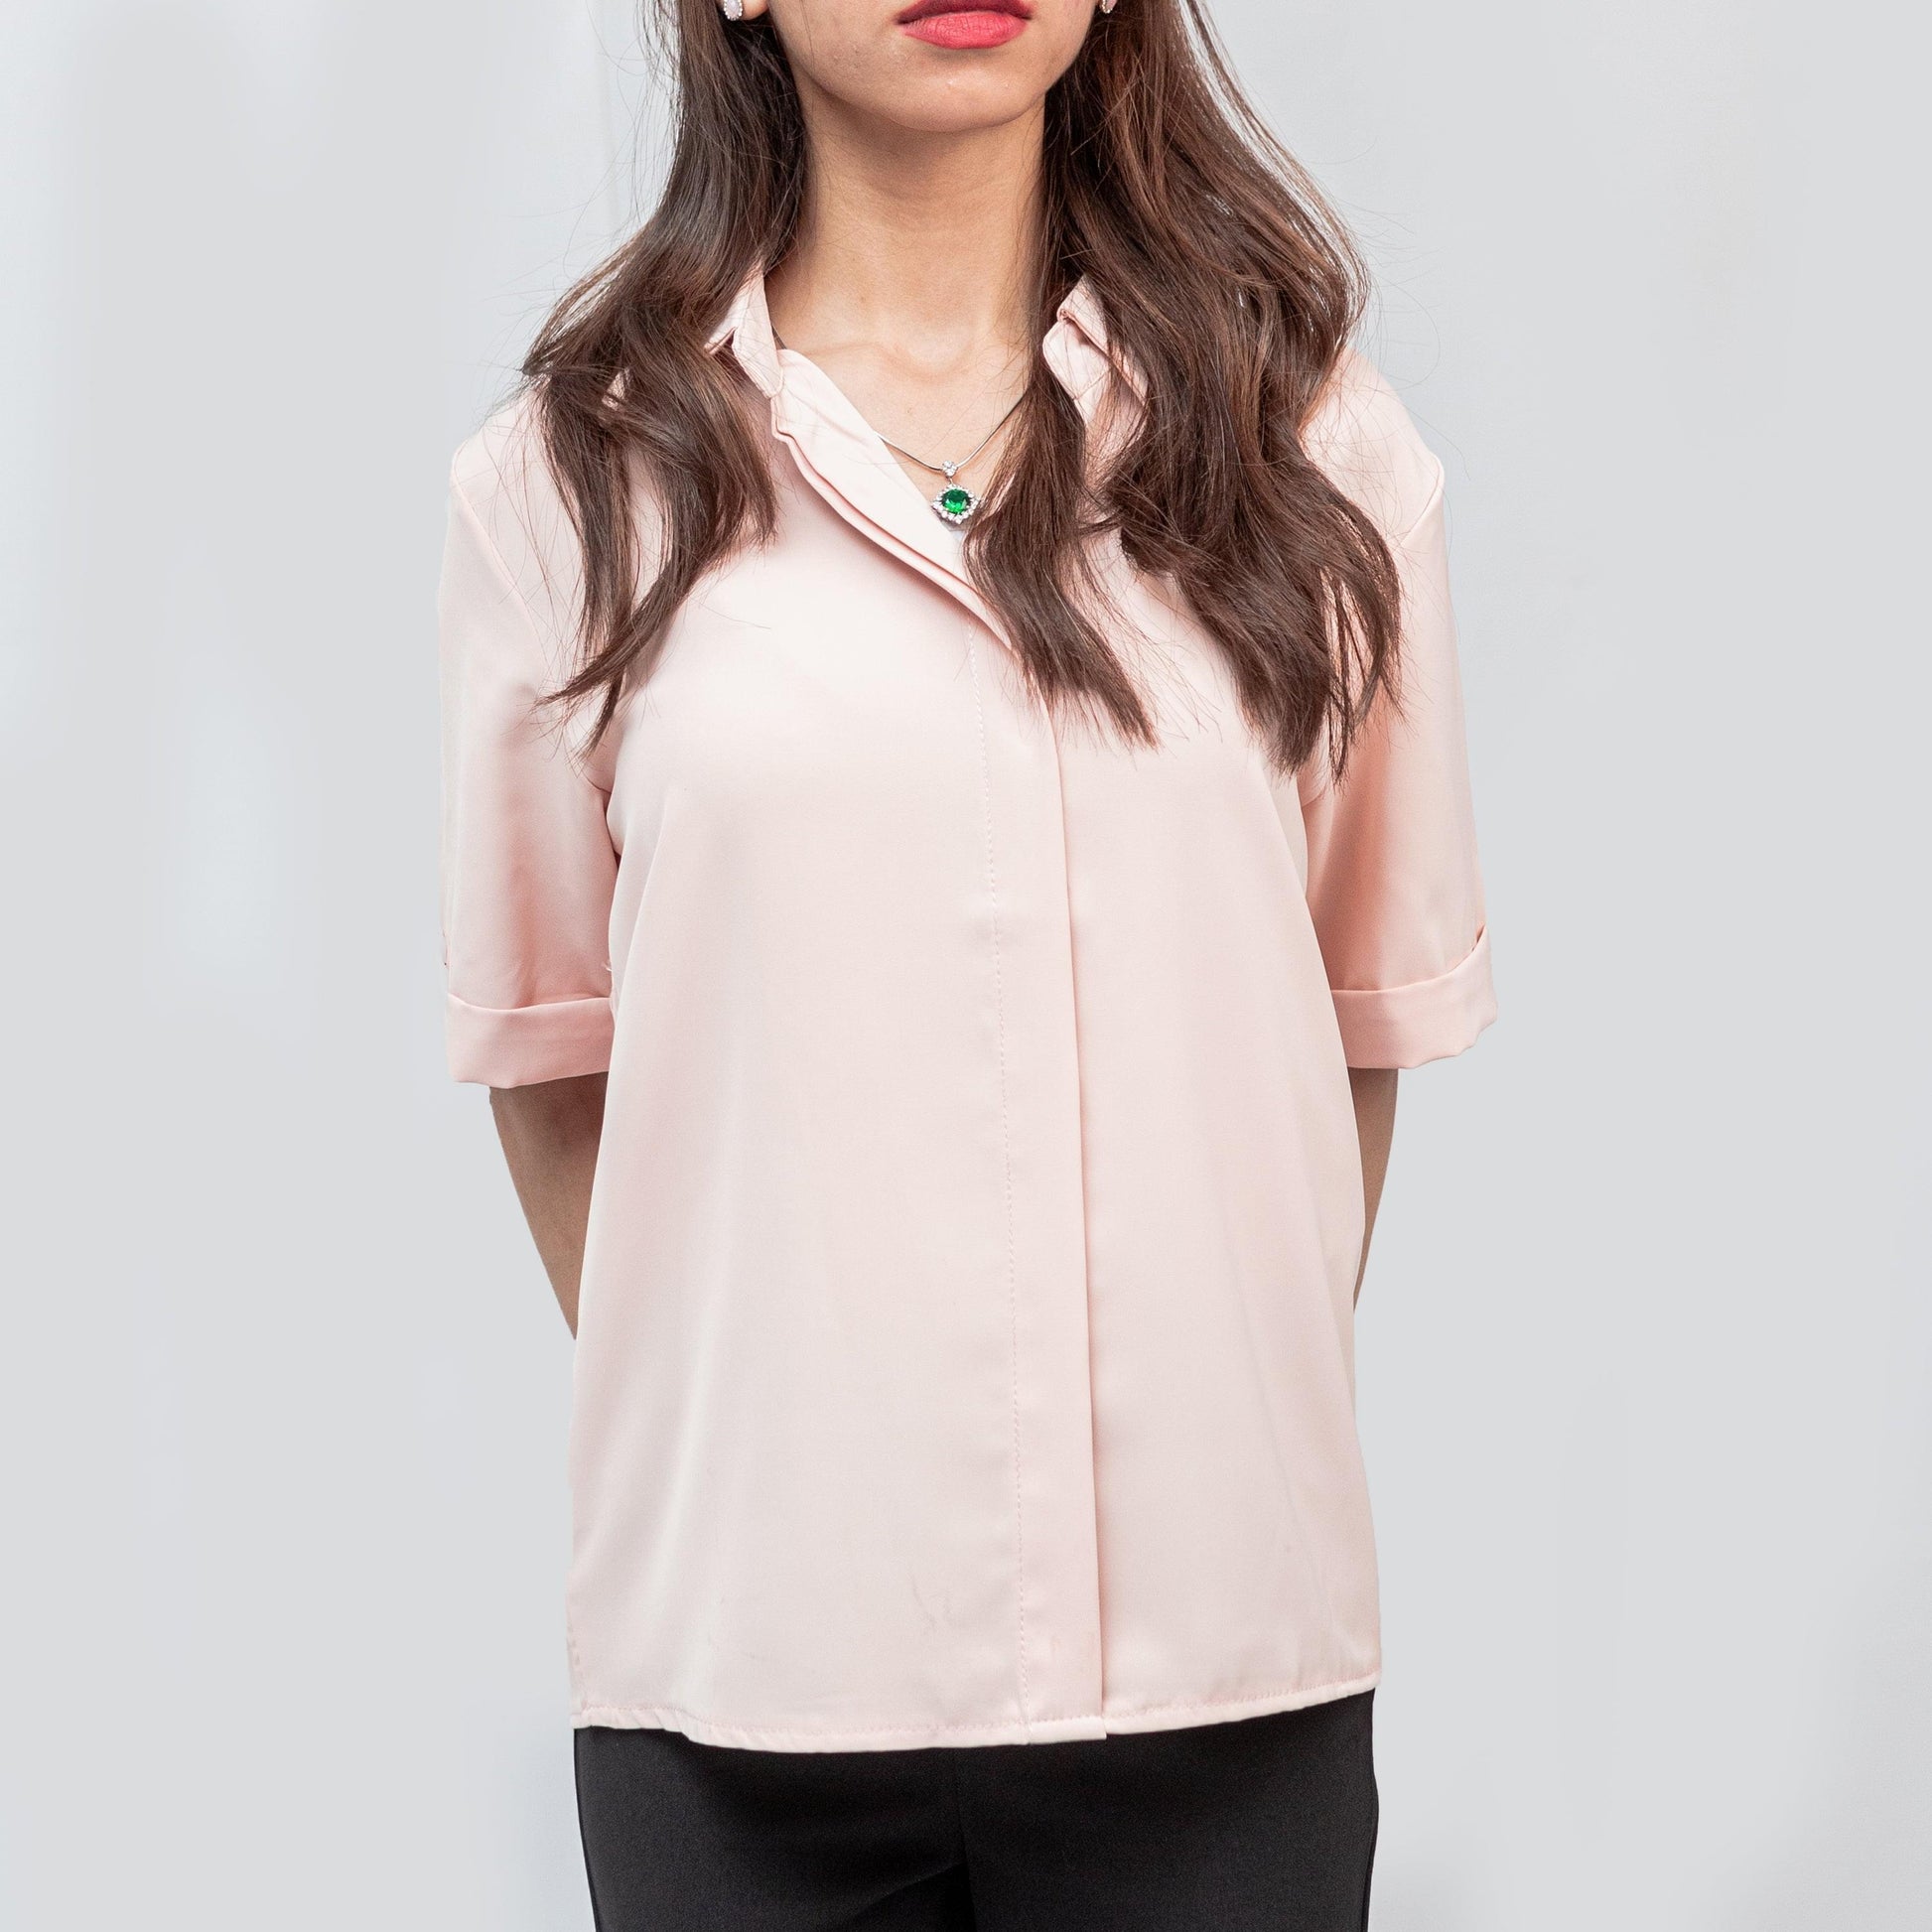 Half-Sleeved Solid Colored Chiffon Shirt Ramay